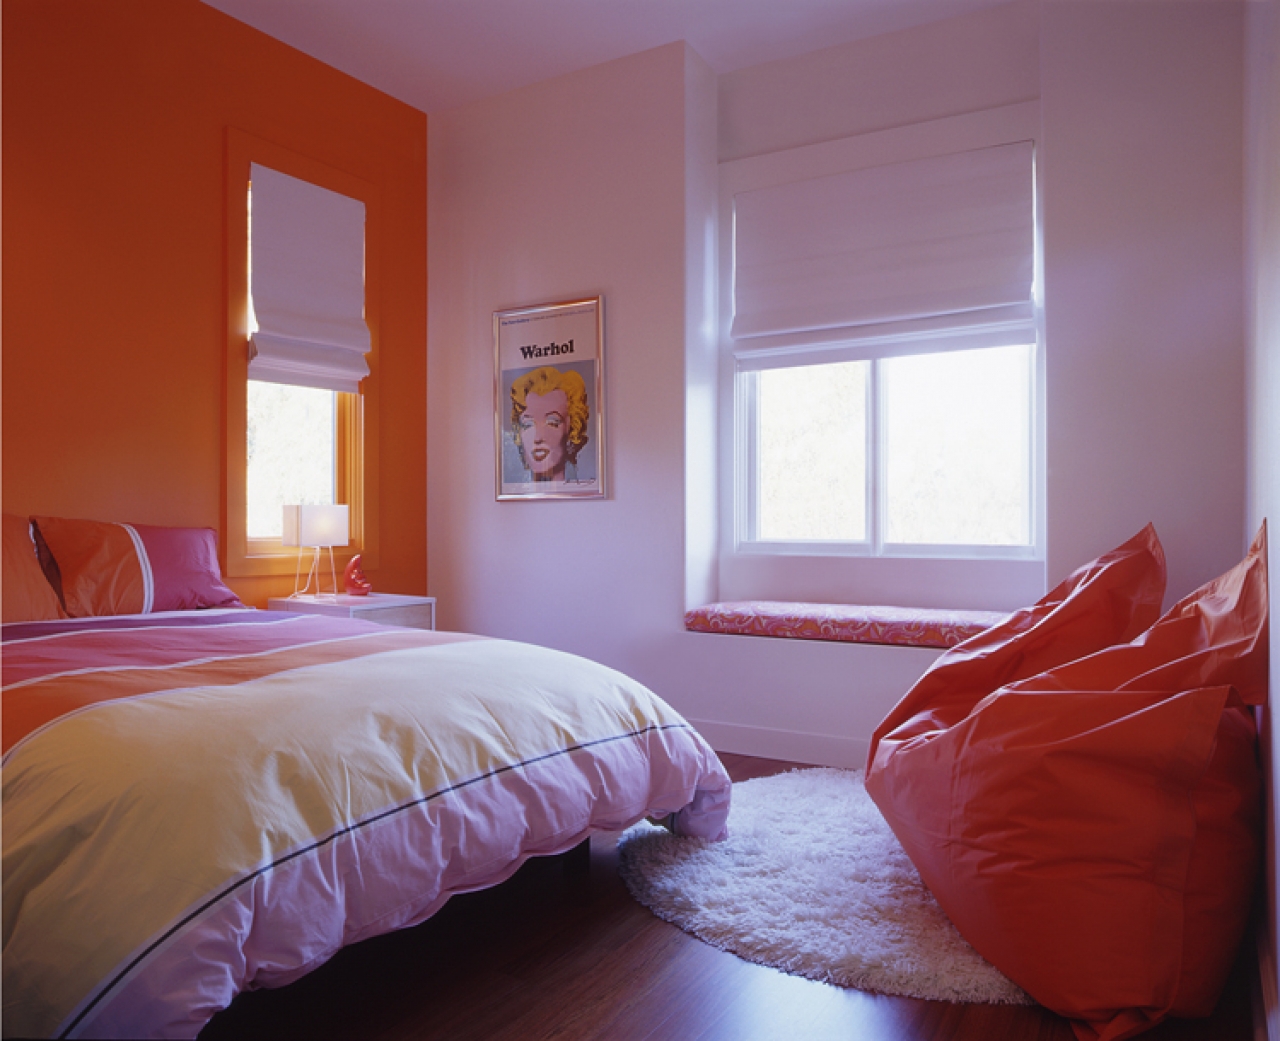 Interior Design Bedroom Ideas On A Budget
